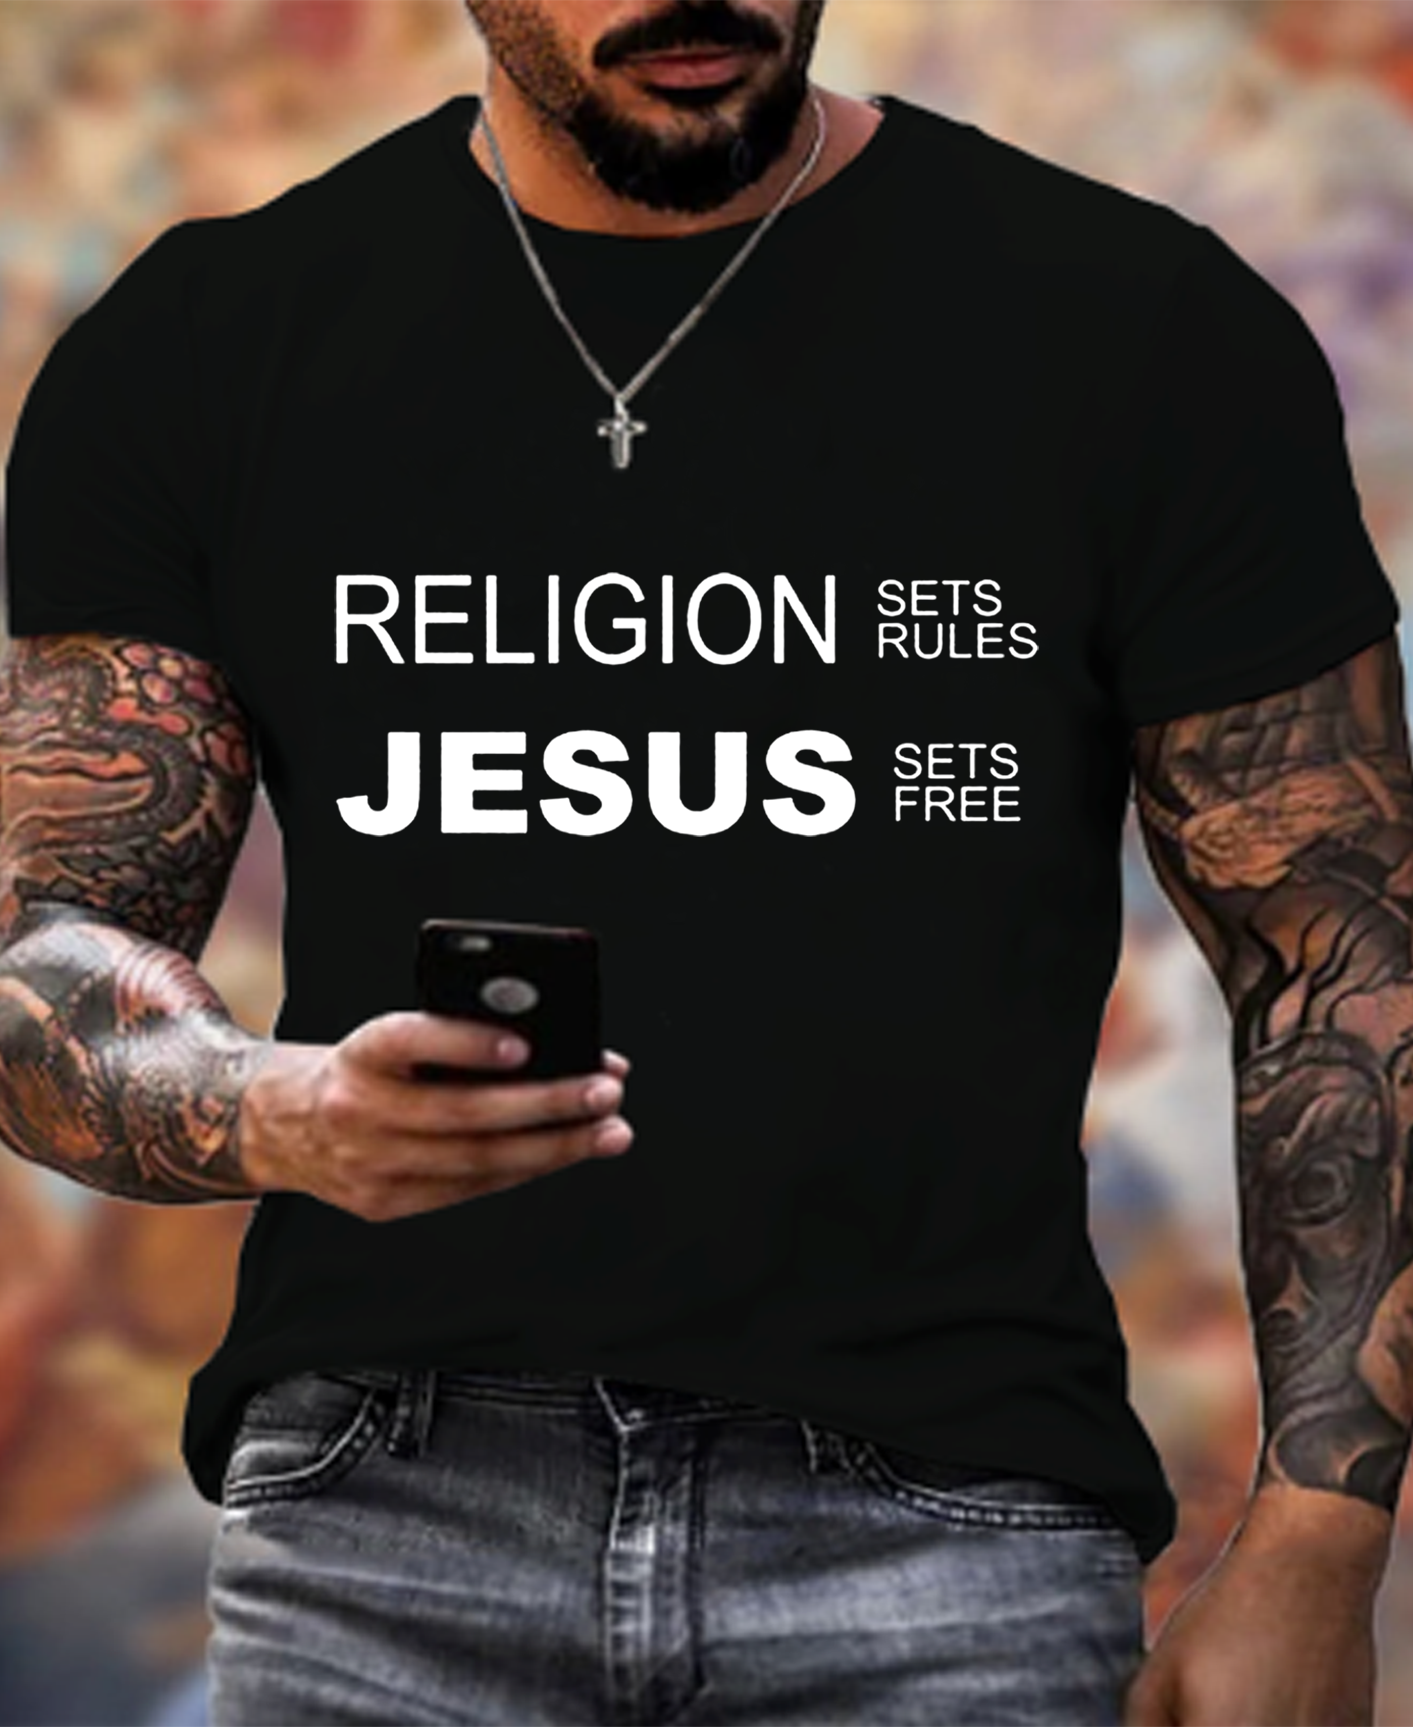 Jesus Sets Free Religion Sets Rules Tee